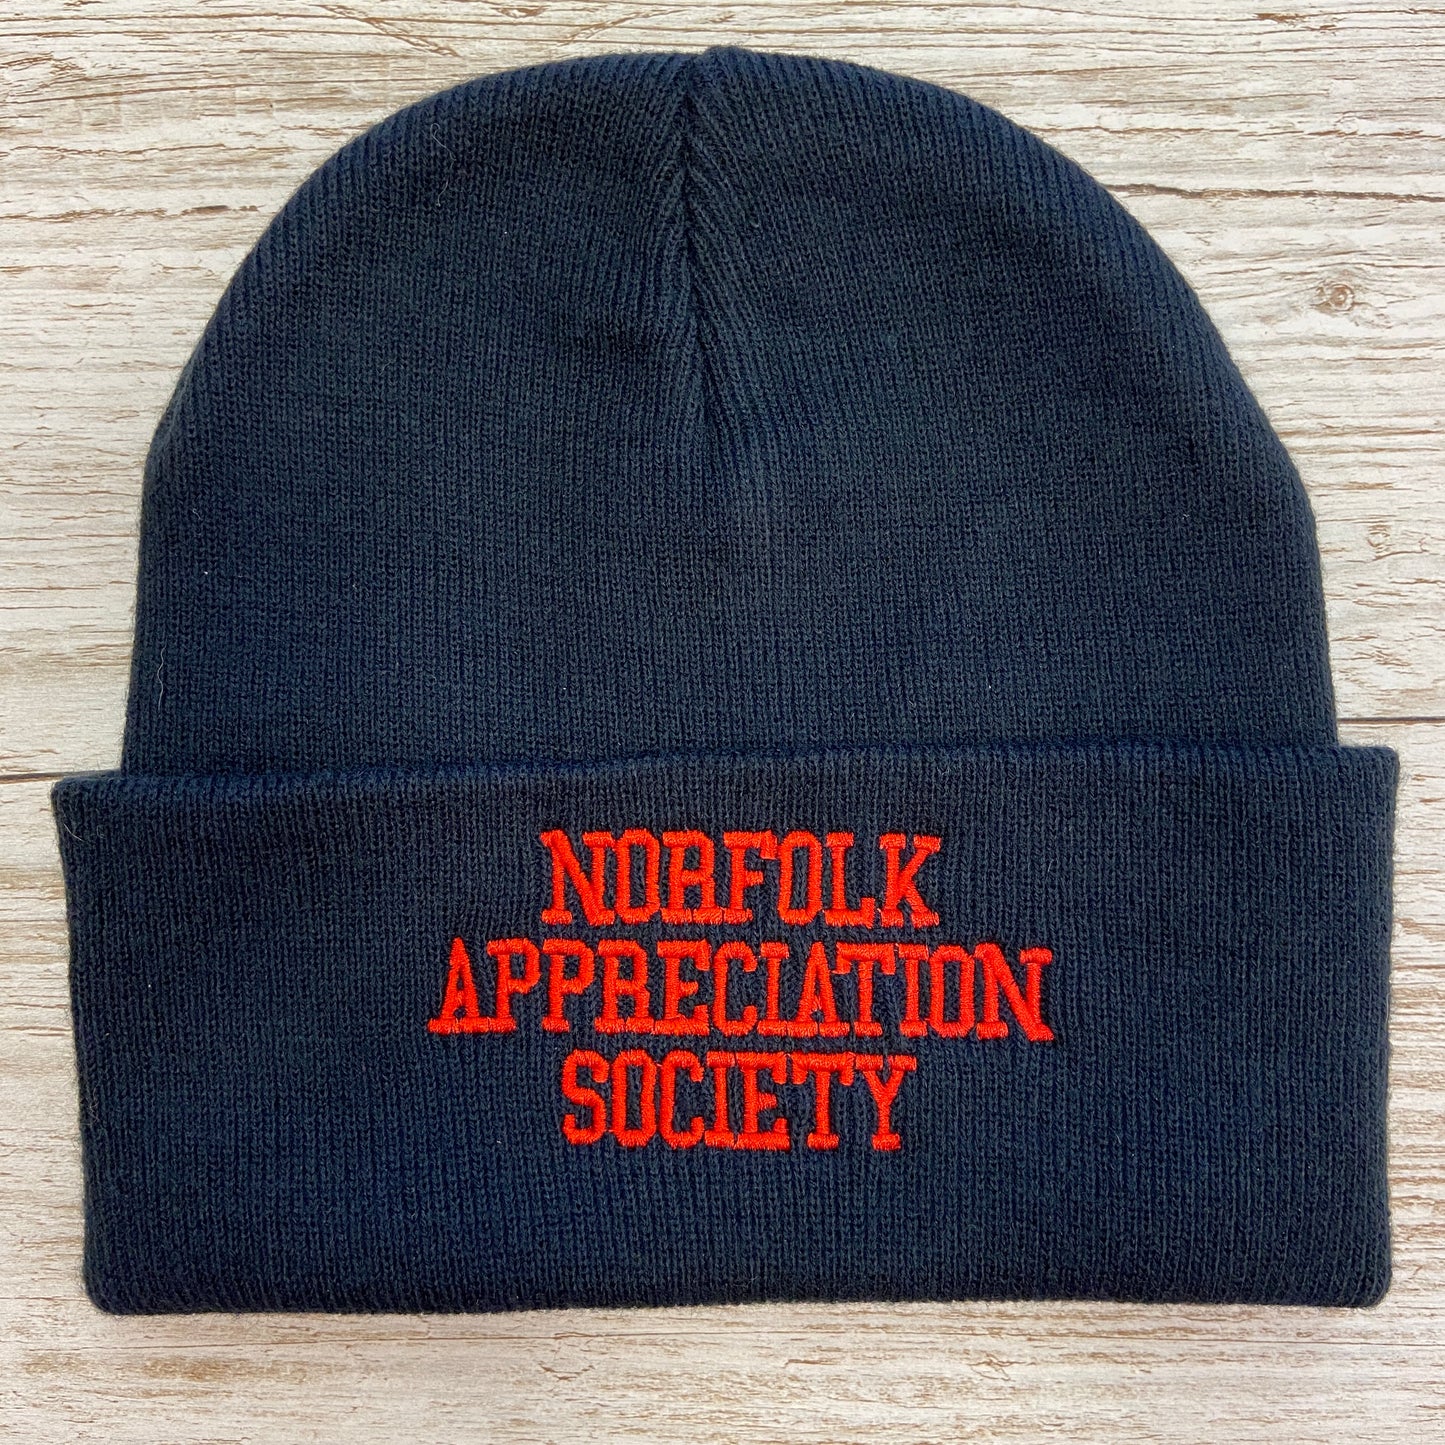 Norfolk Appreciation Society Beanie Hat